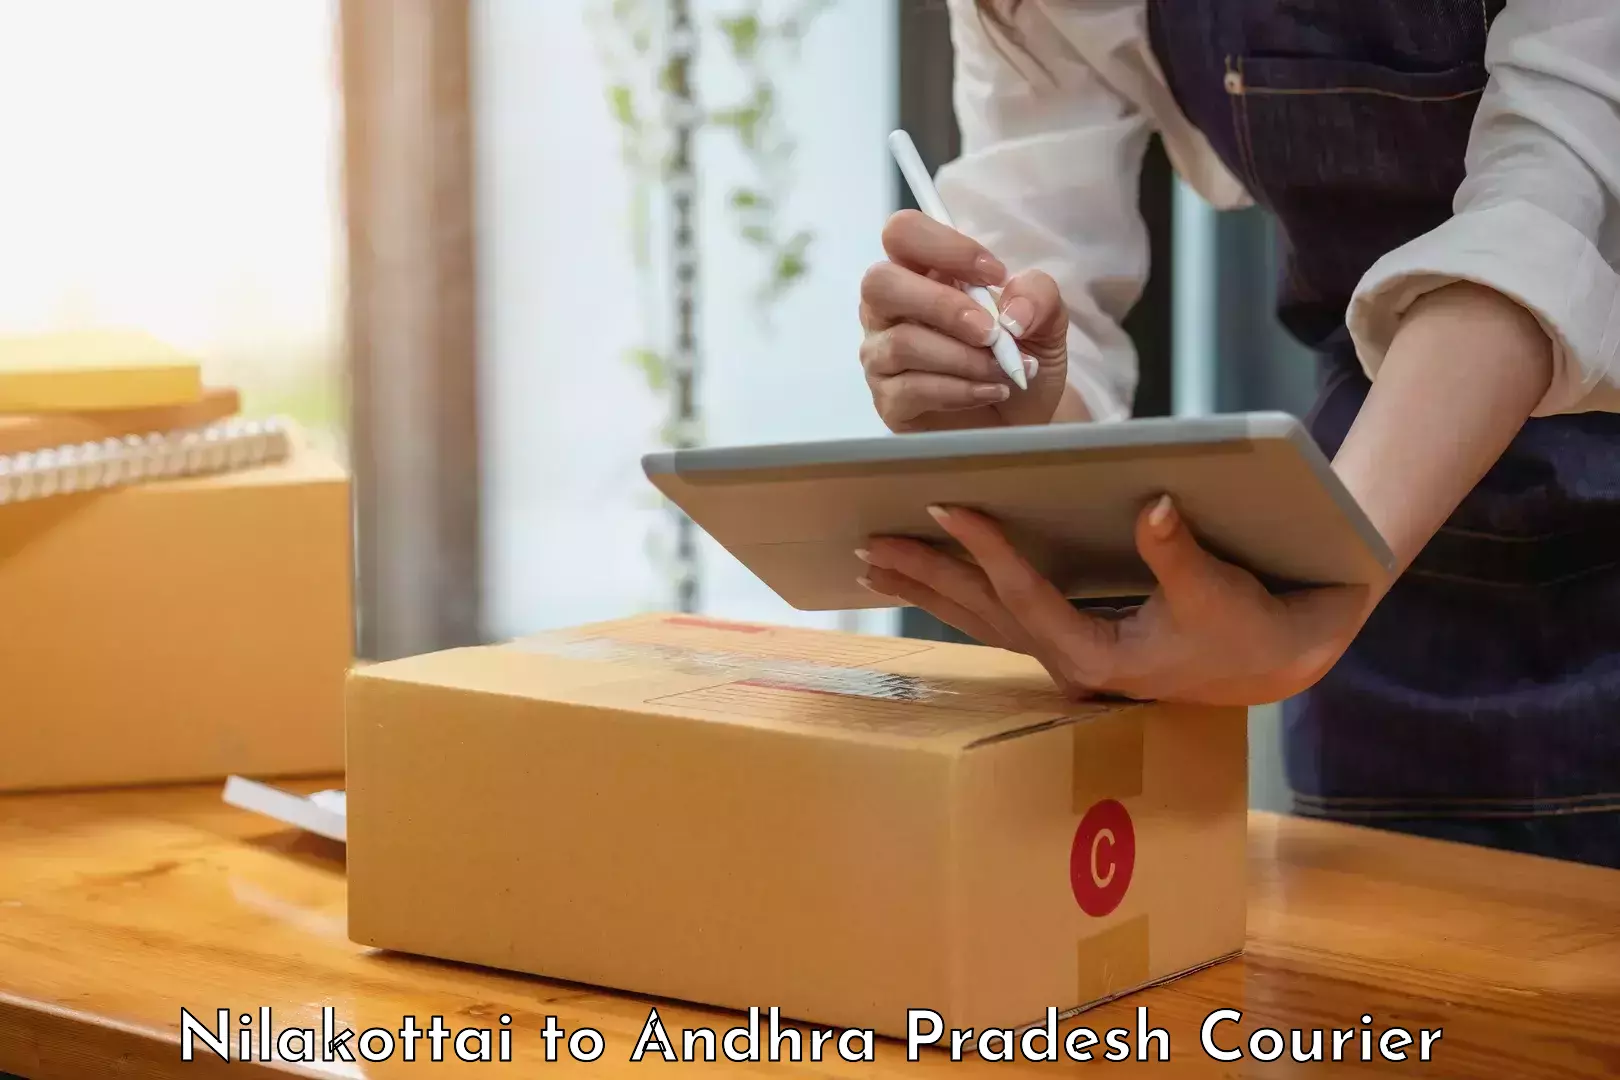 Modern courier technology Nilakottai to Puttur Tirupati